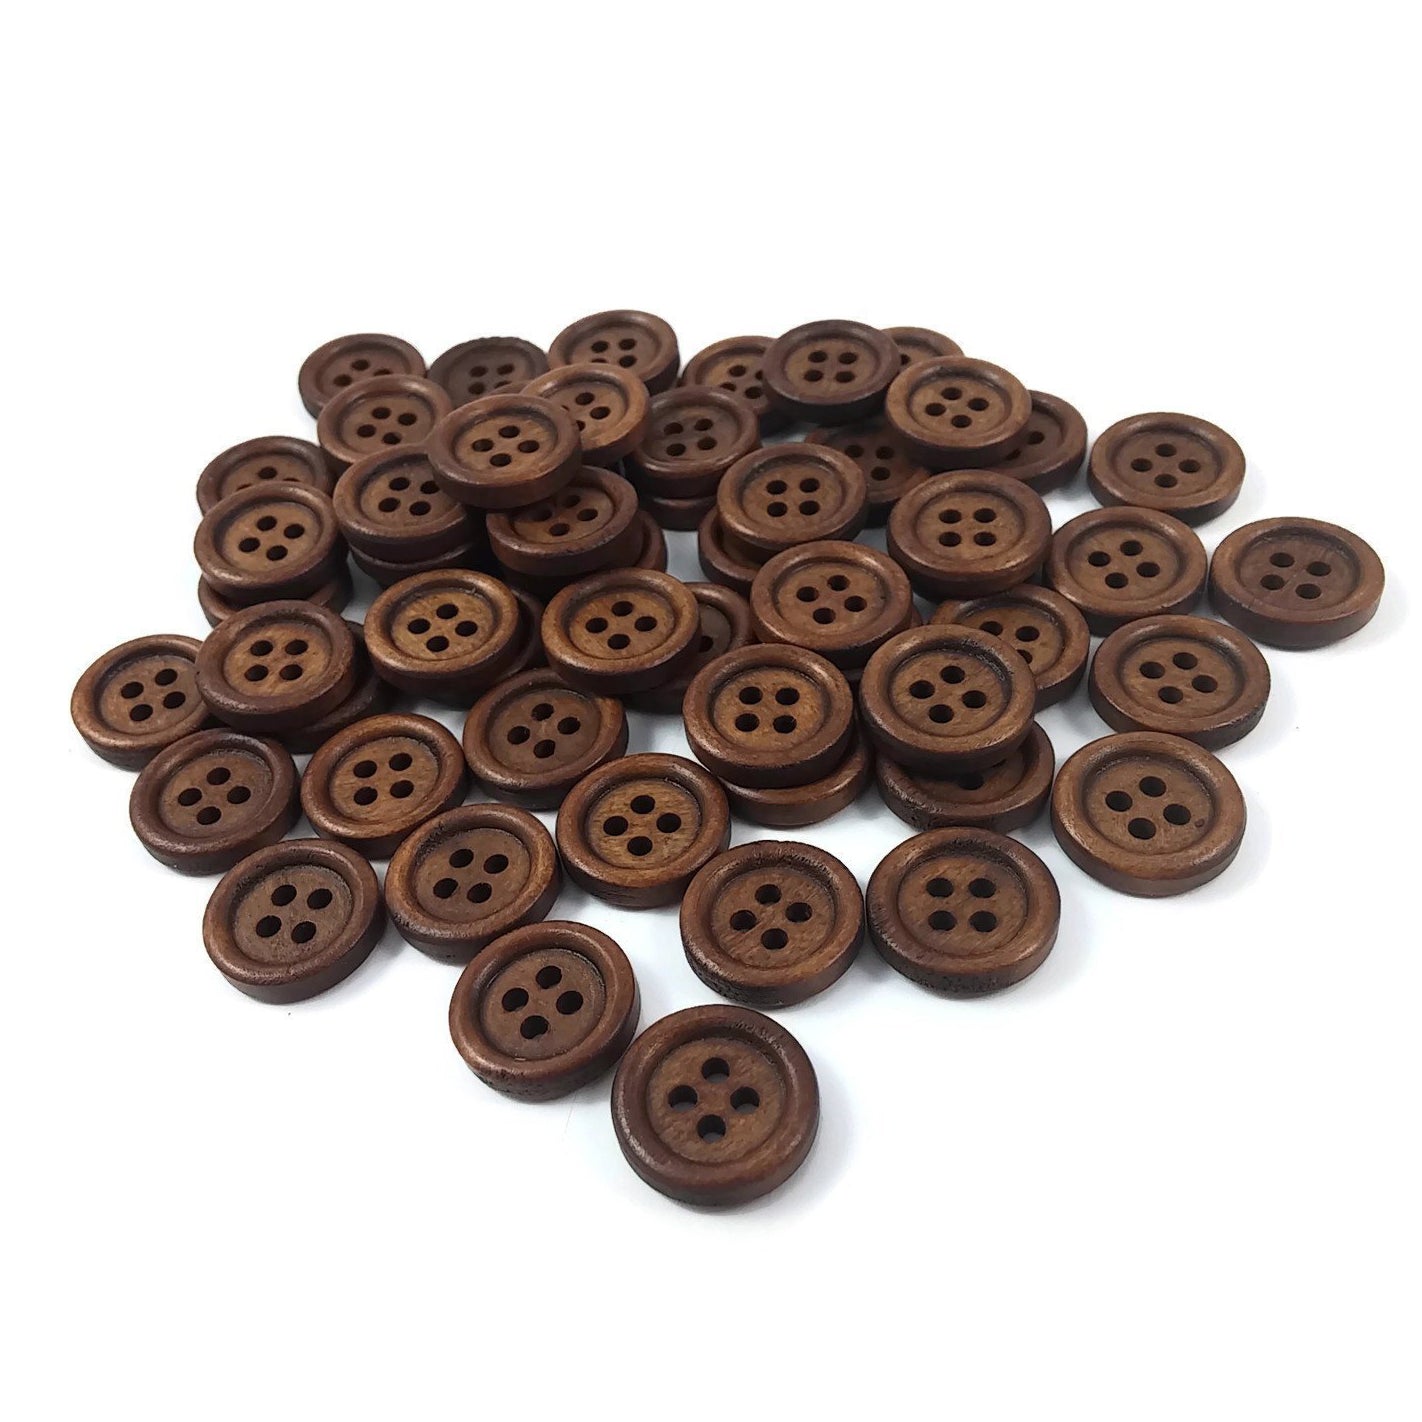 Wholesale wooden Toggle Buttons - 4 x 1.2 cm - bulk set of 12